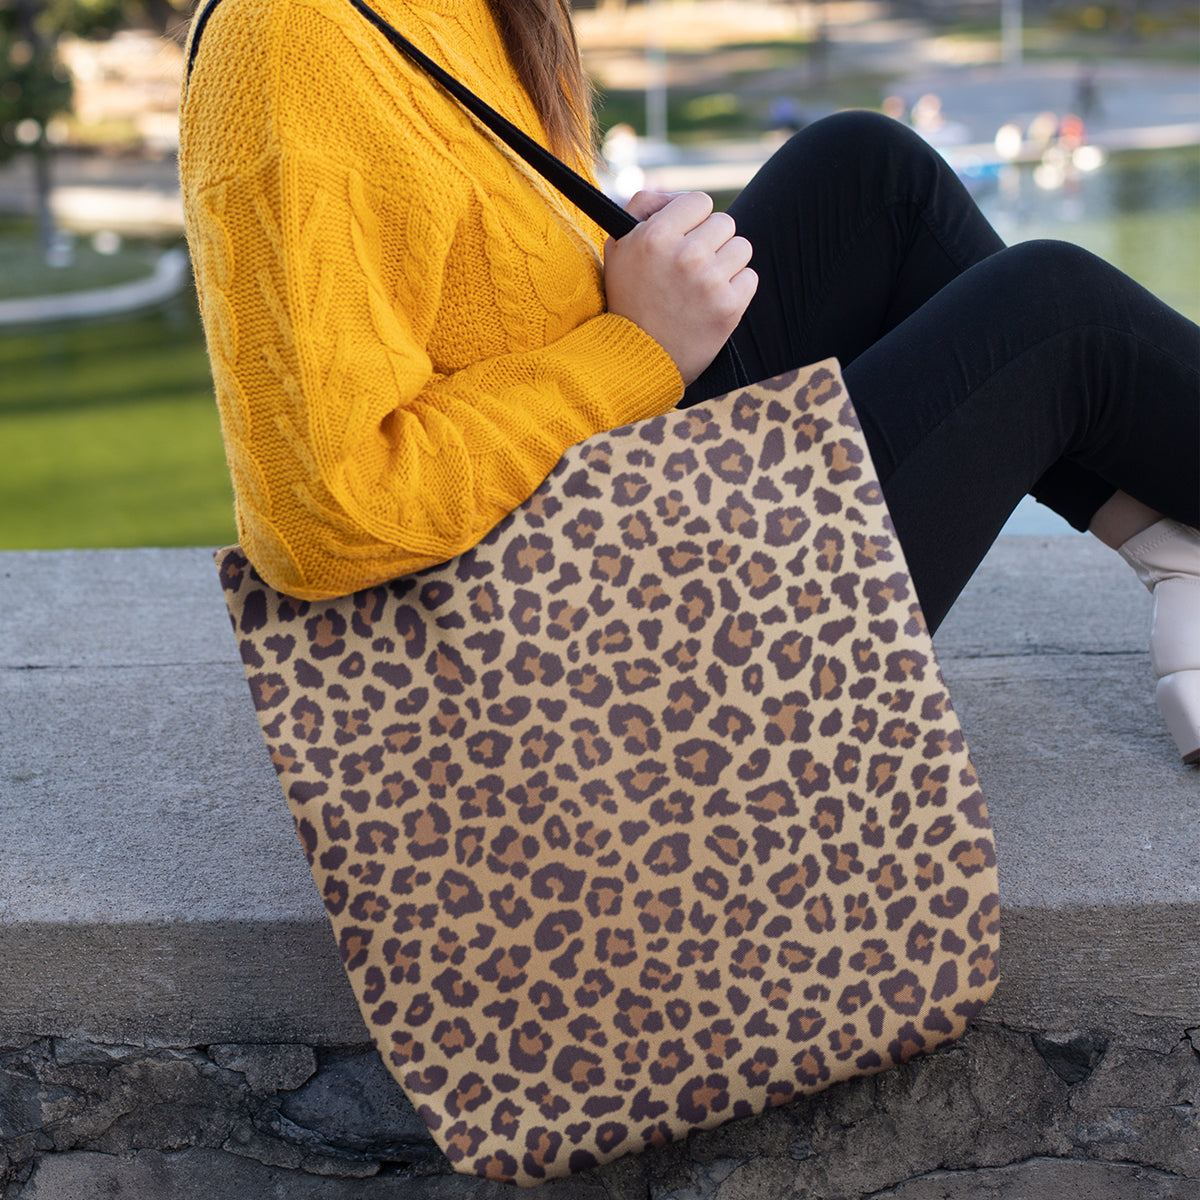 Coseey Leopard Print Animal Tote Bag